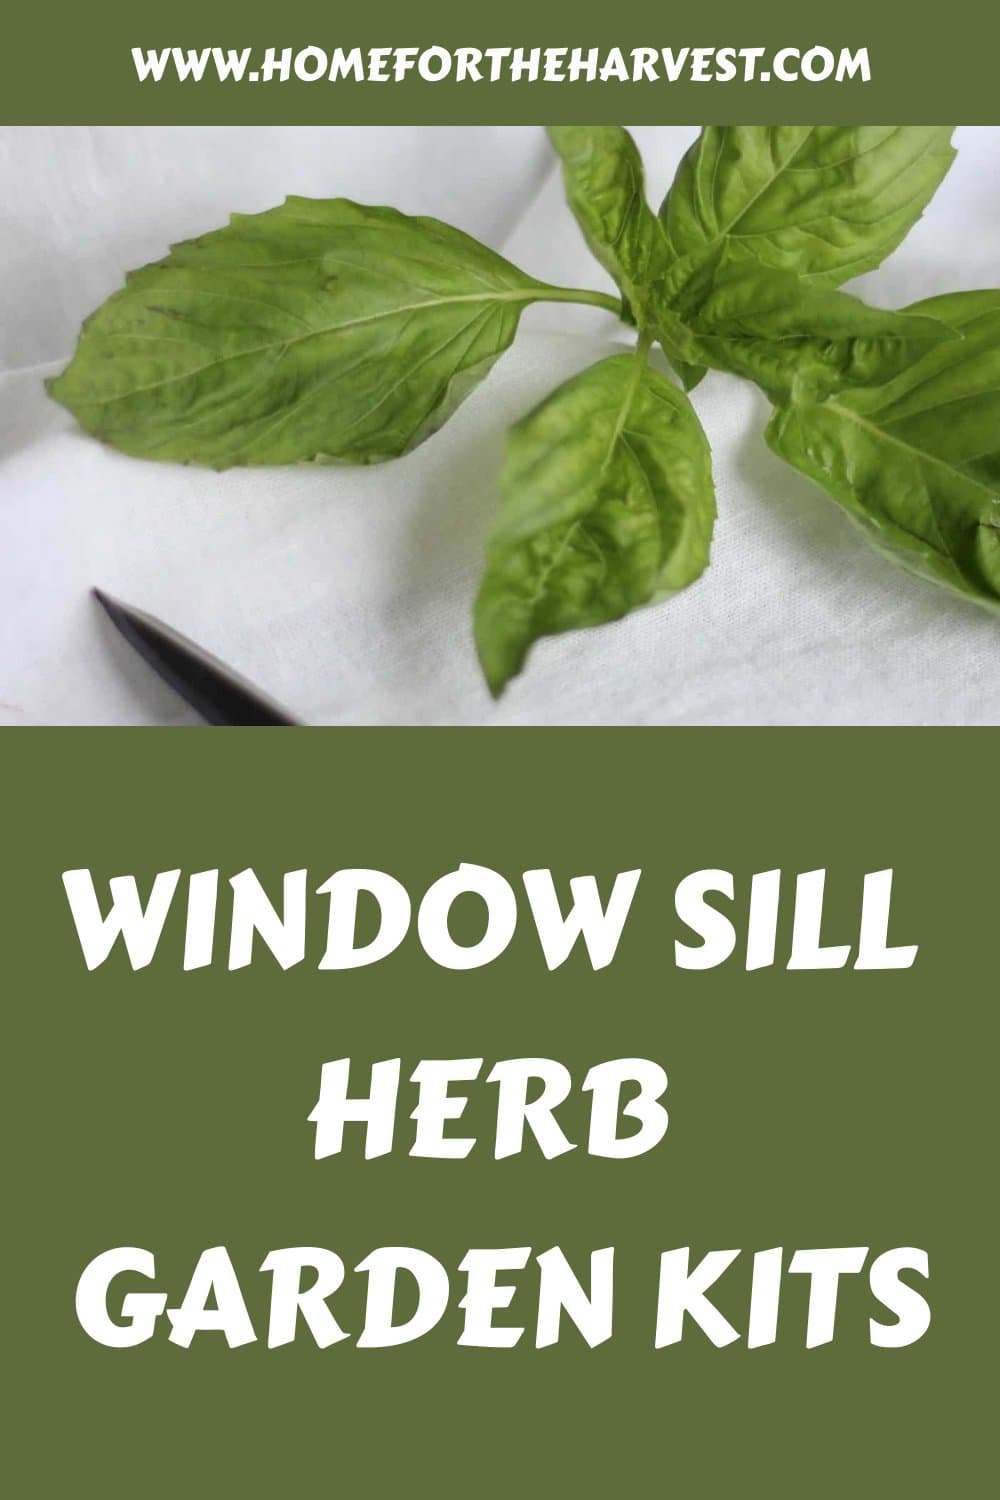 Window sill herb garden kits generated pin 9687